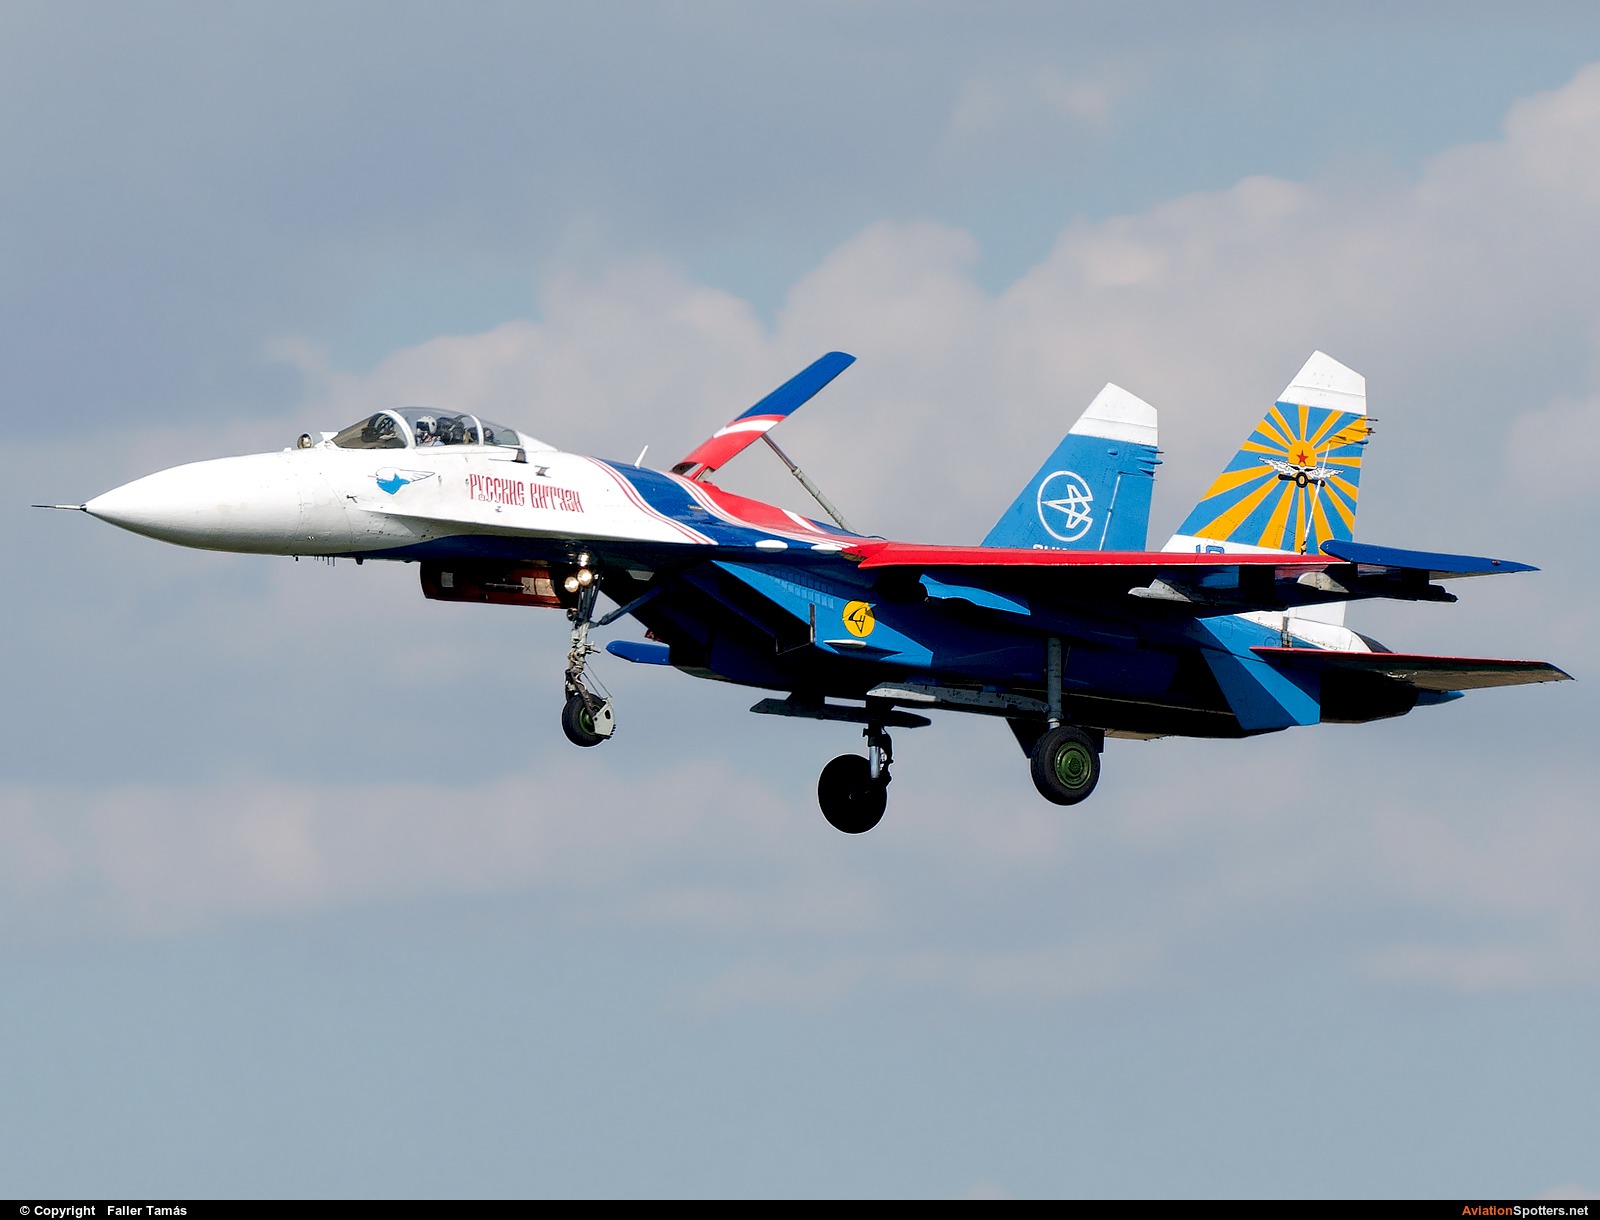 Russia - Air Force : Russian Knights  -  Su-27UB  (12) By Faller Tamás (fallto78)